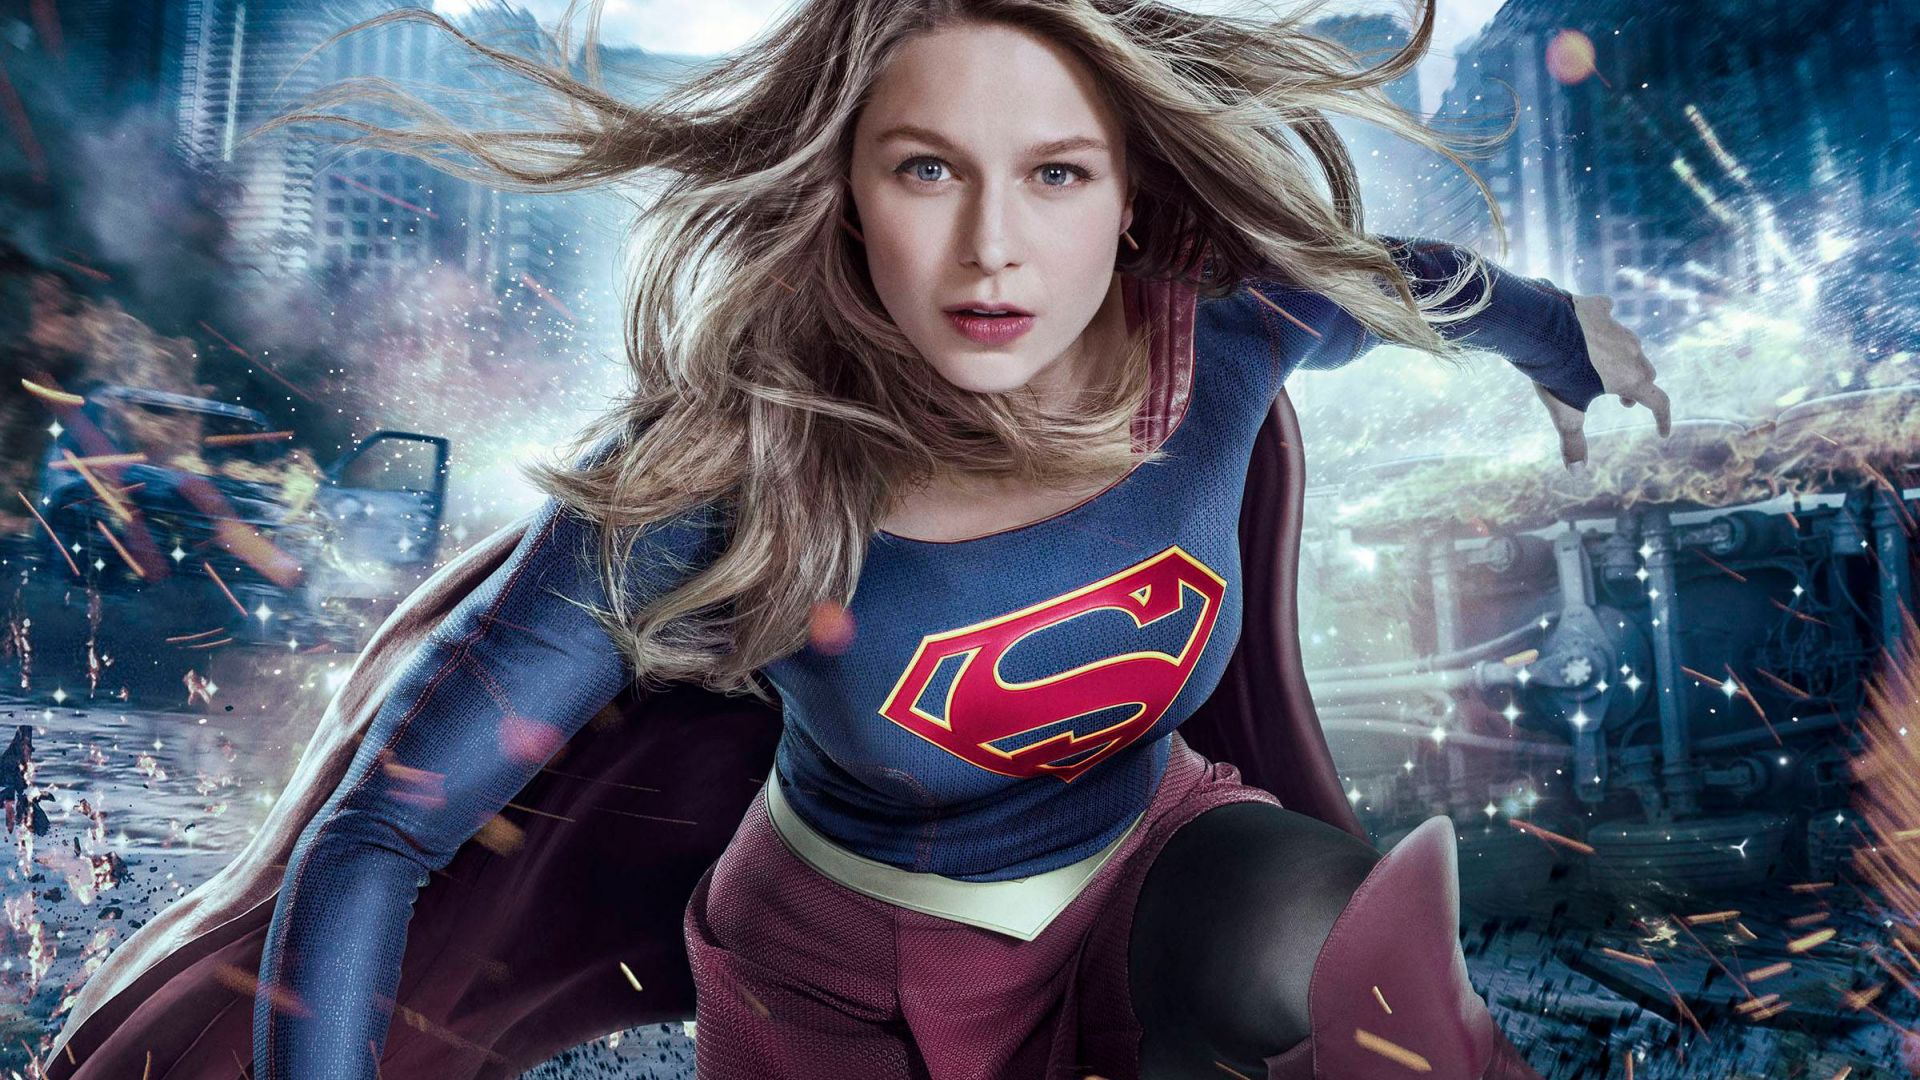 Wallpaper Melissa Benoist, Supergirl, 2017 TV series, new season